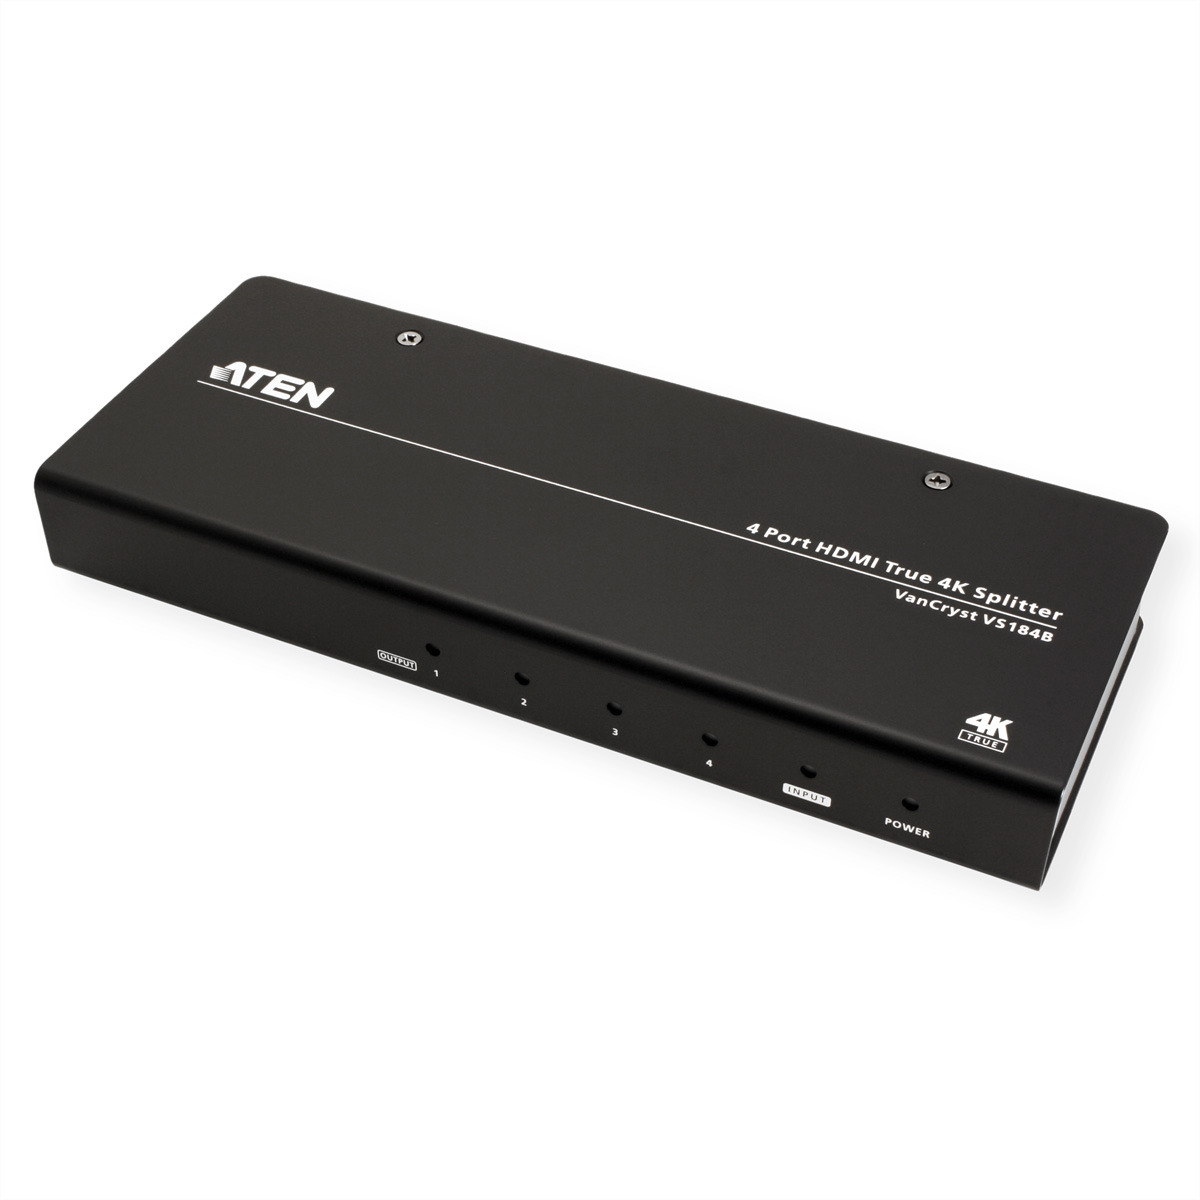 ATEN VS184B True HDMI-Video-Splitter HDMI 4-Port Splitter 4K/2K